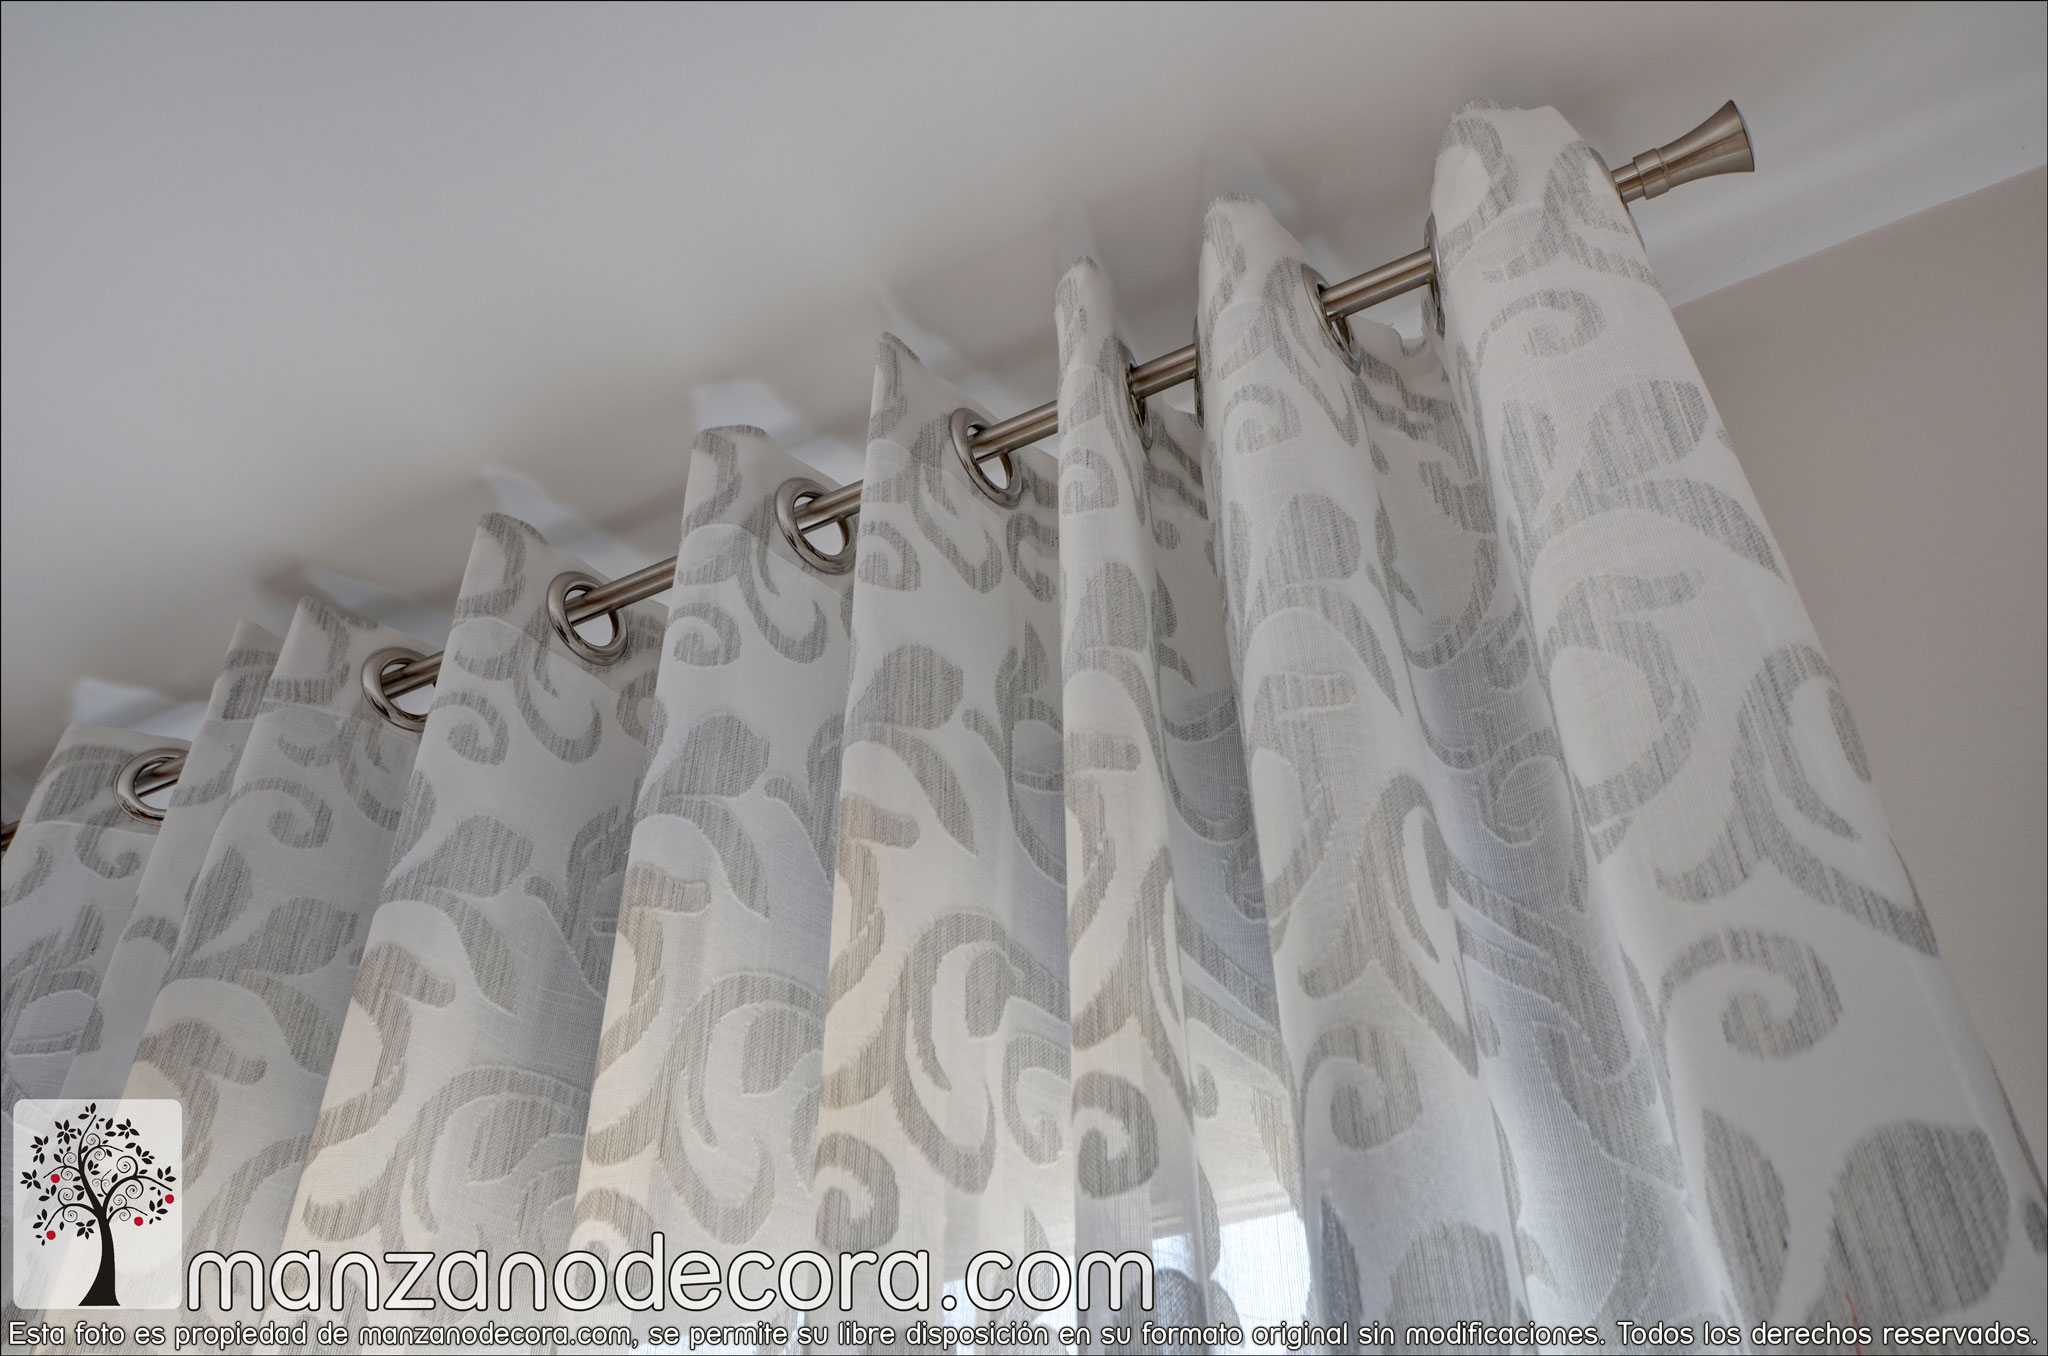 Mecanismo para cortina: Barra o Riel - Cortinas Manzanodecora